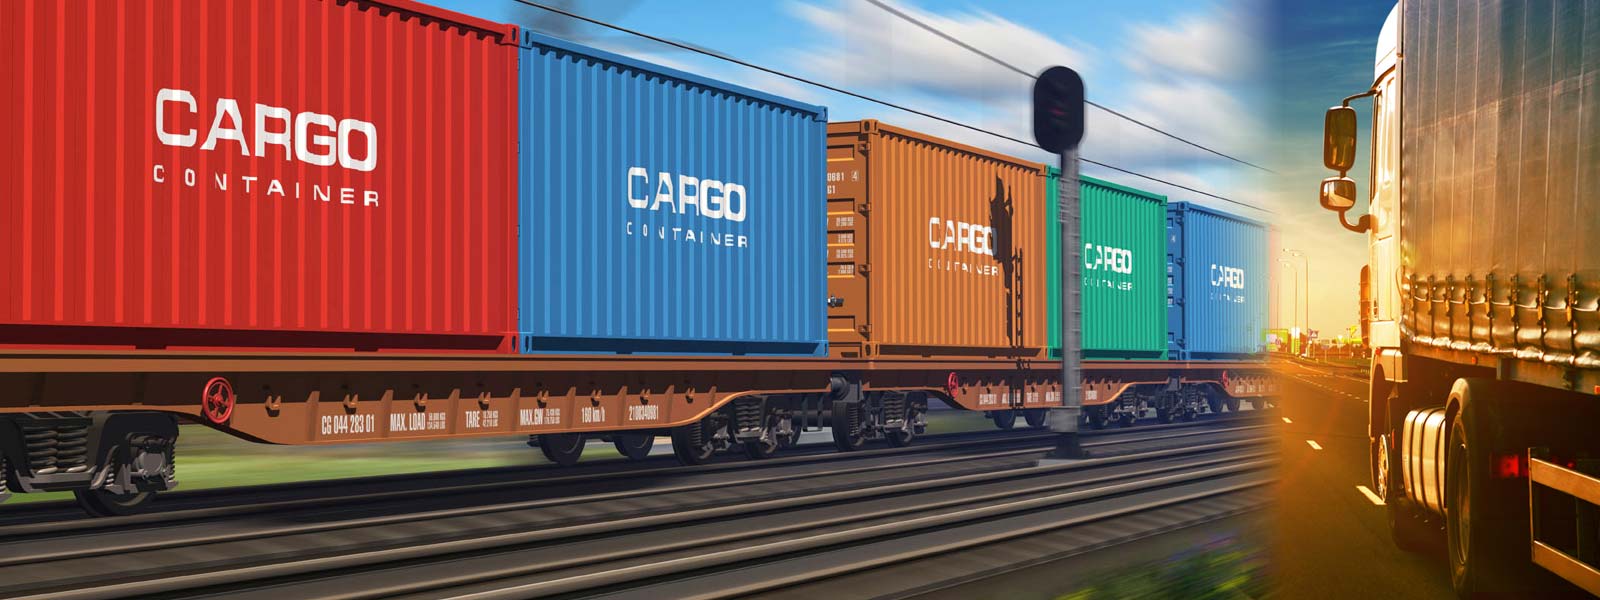 Rail Cargo